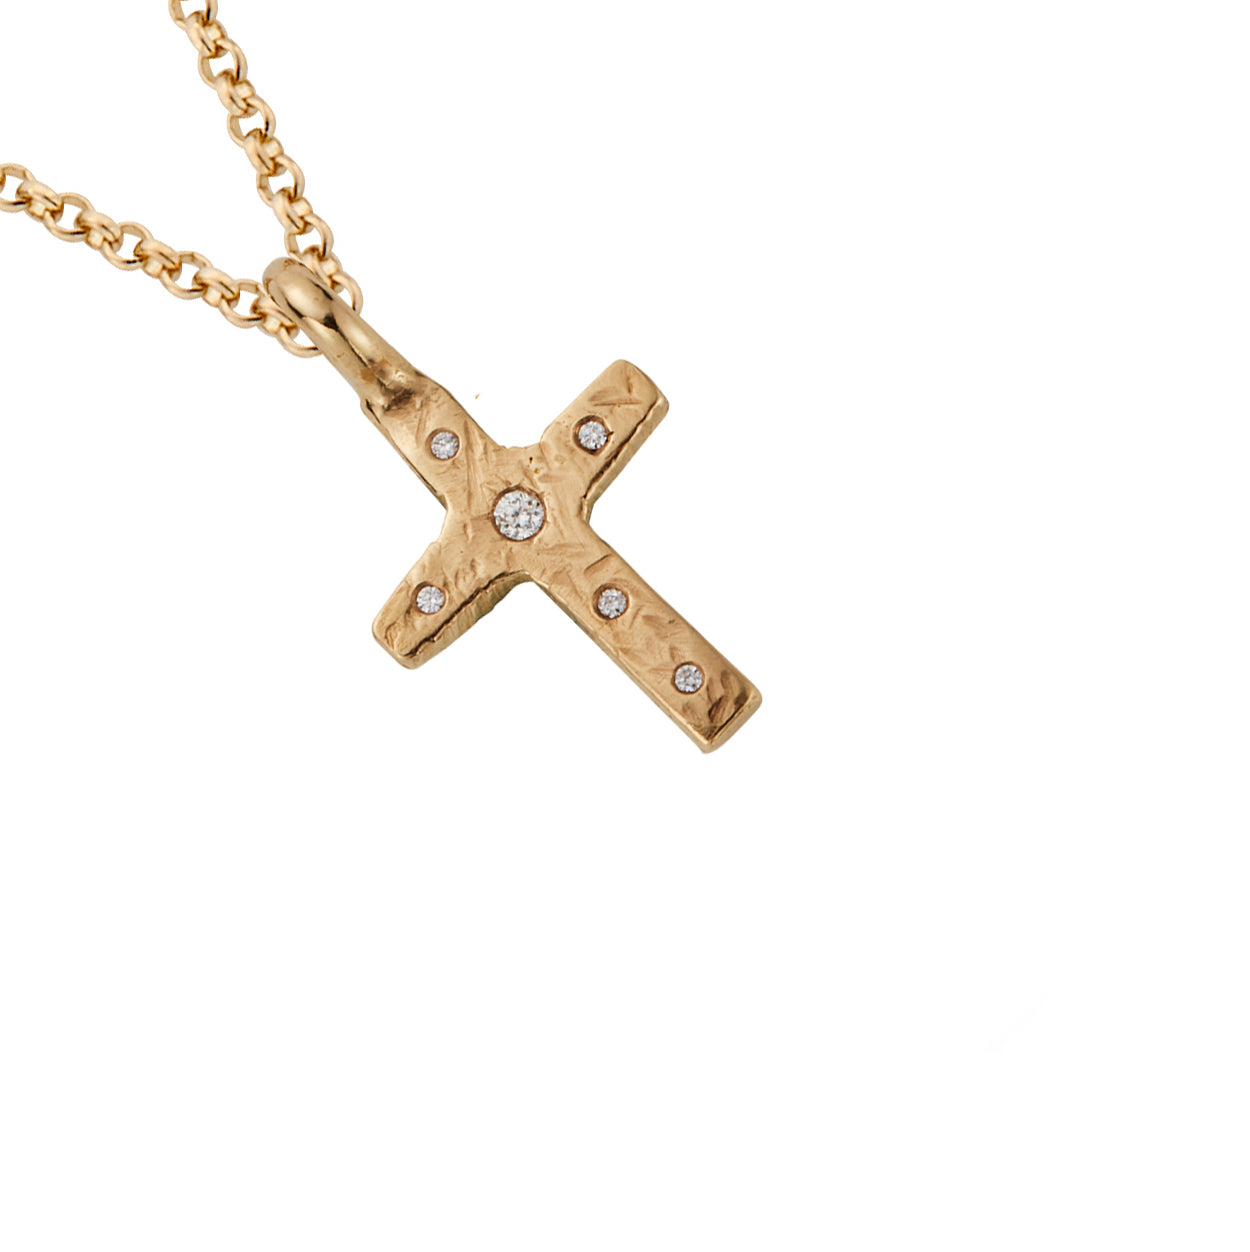 Gold Diamond Square Cross Necklace